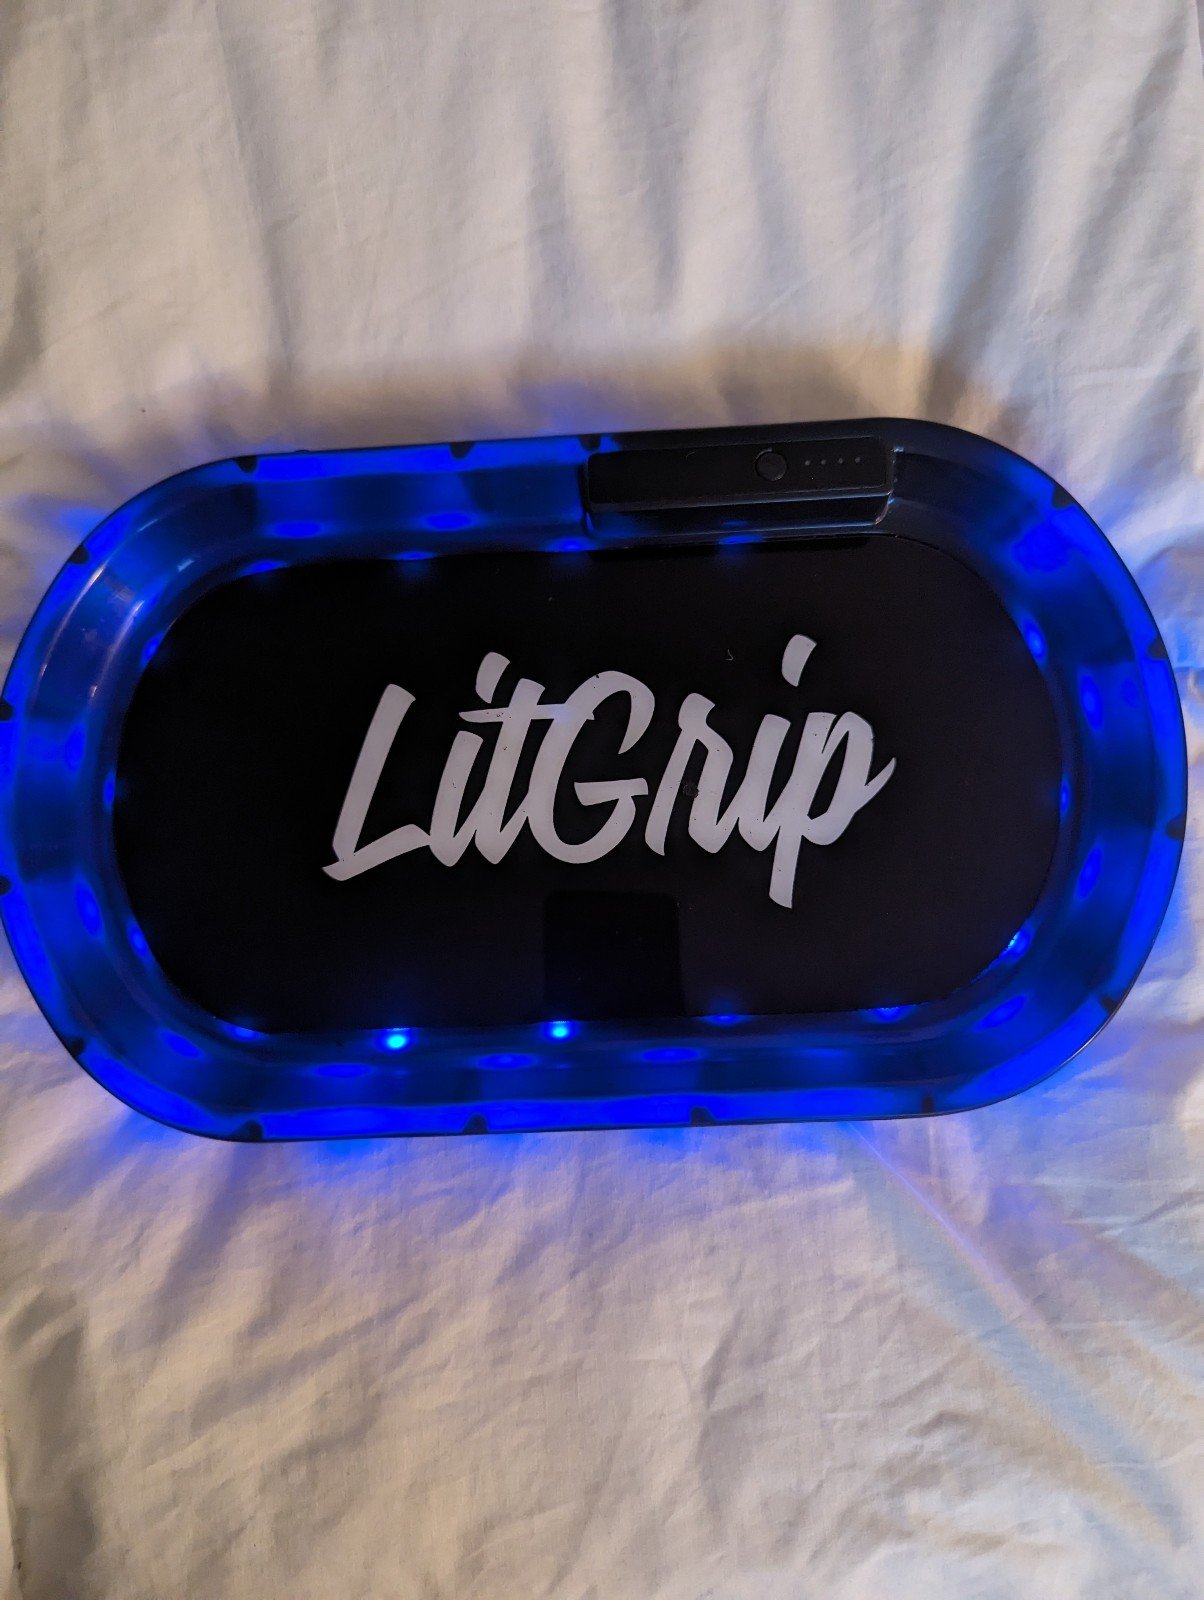 Lit Grip LED tray Aj4b7Mpdh